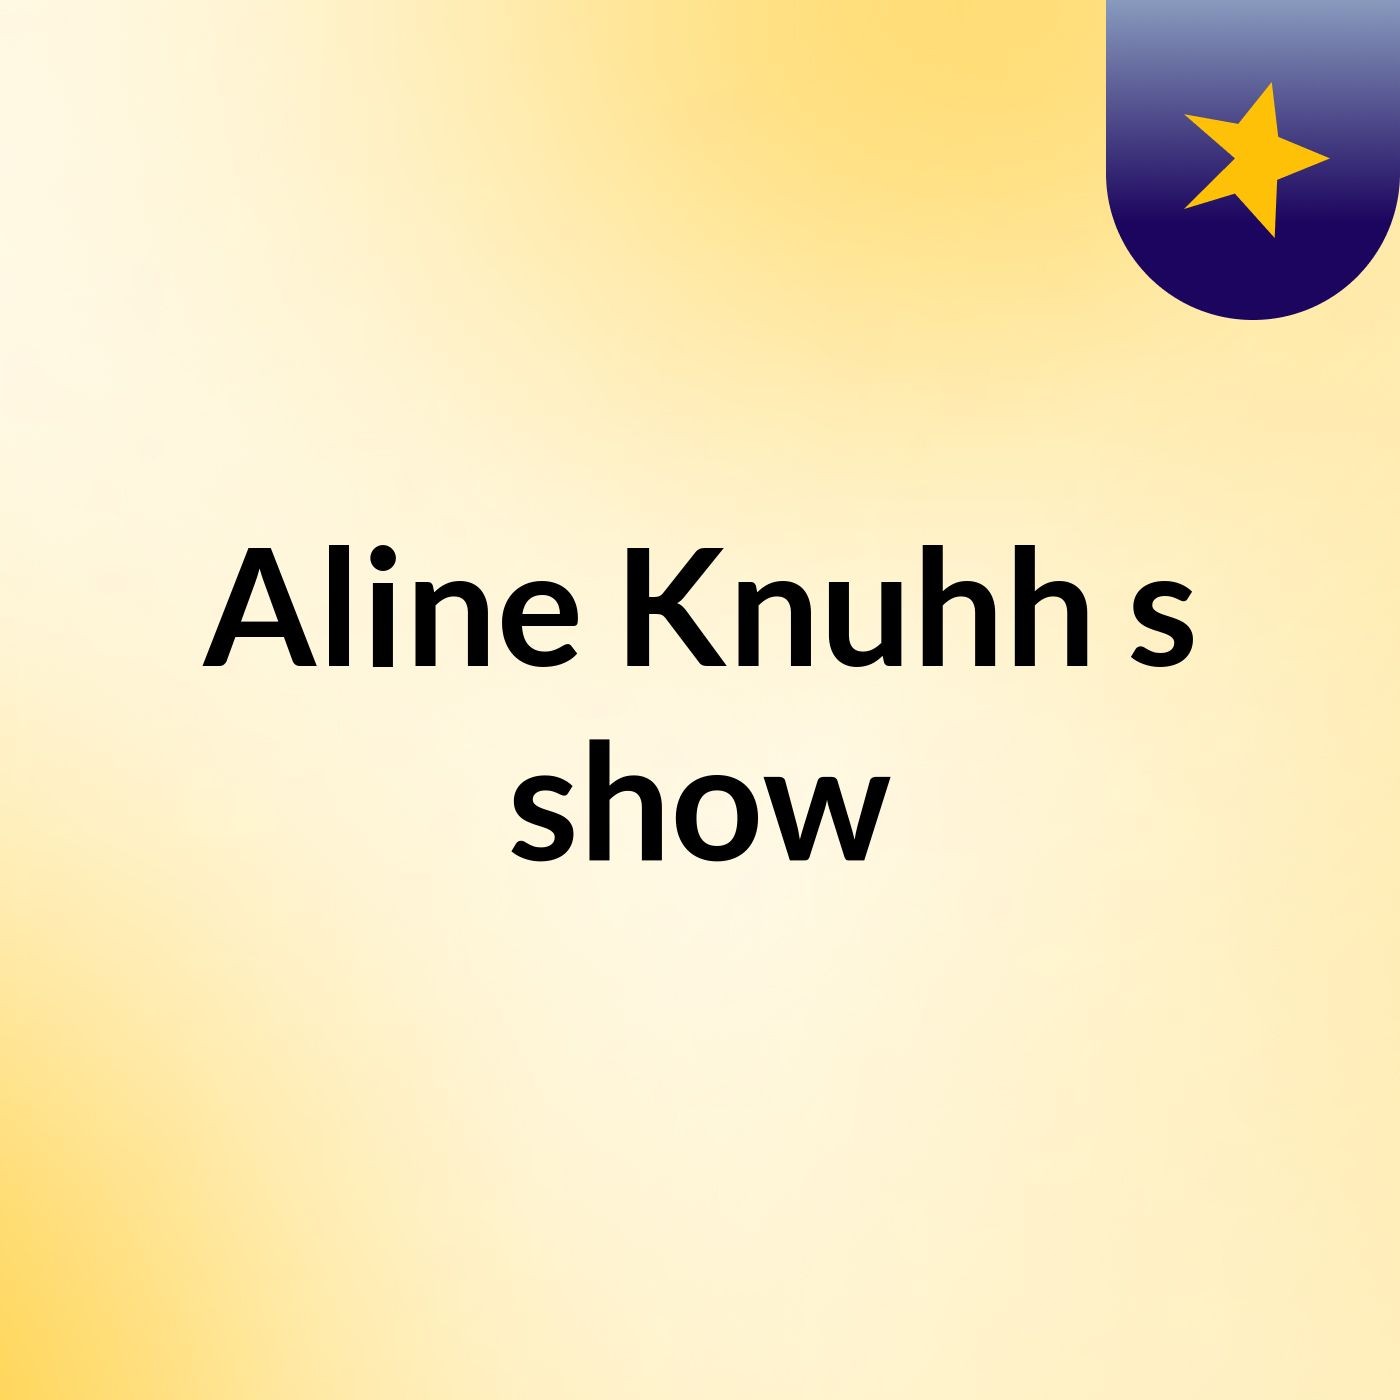 Aline Knuhh's show